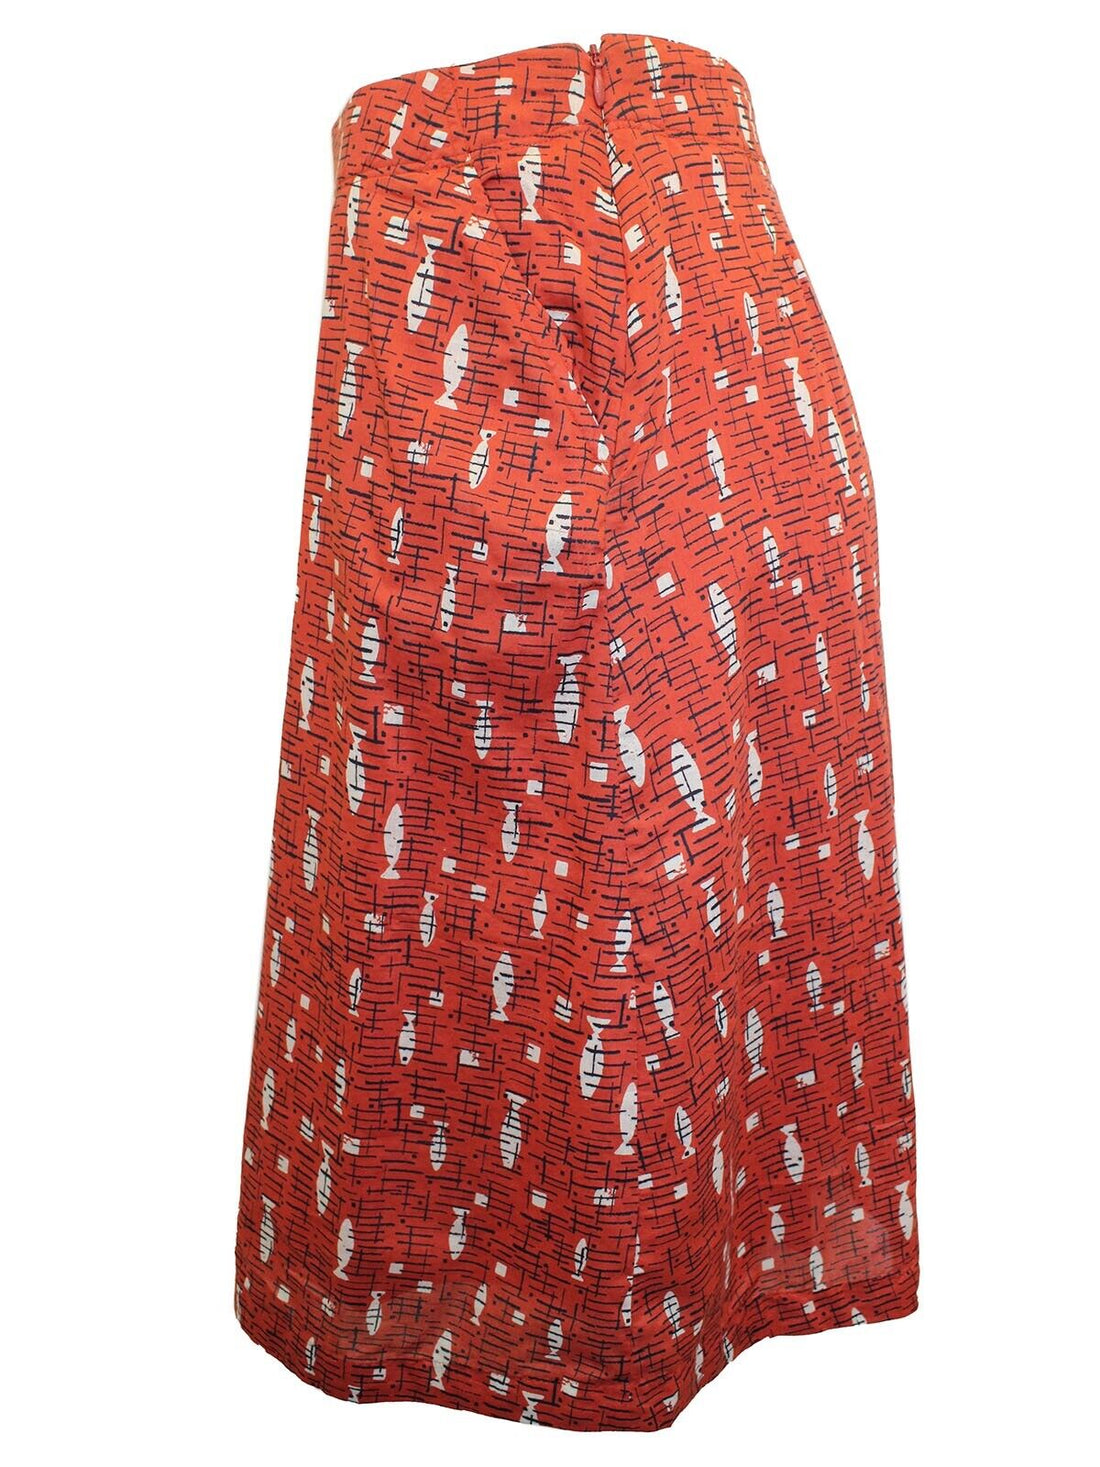 EX Seasalt Brick Red Paint Pot Skirt in Size 22 see description for measurements